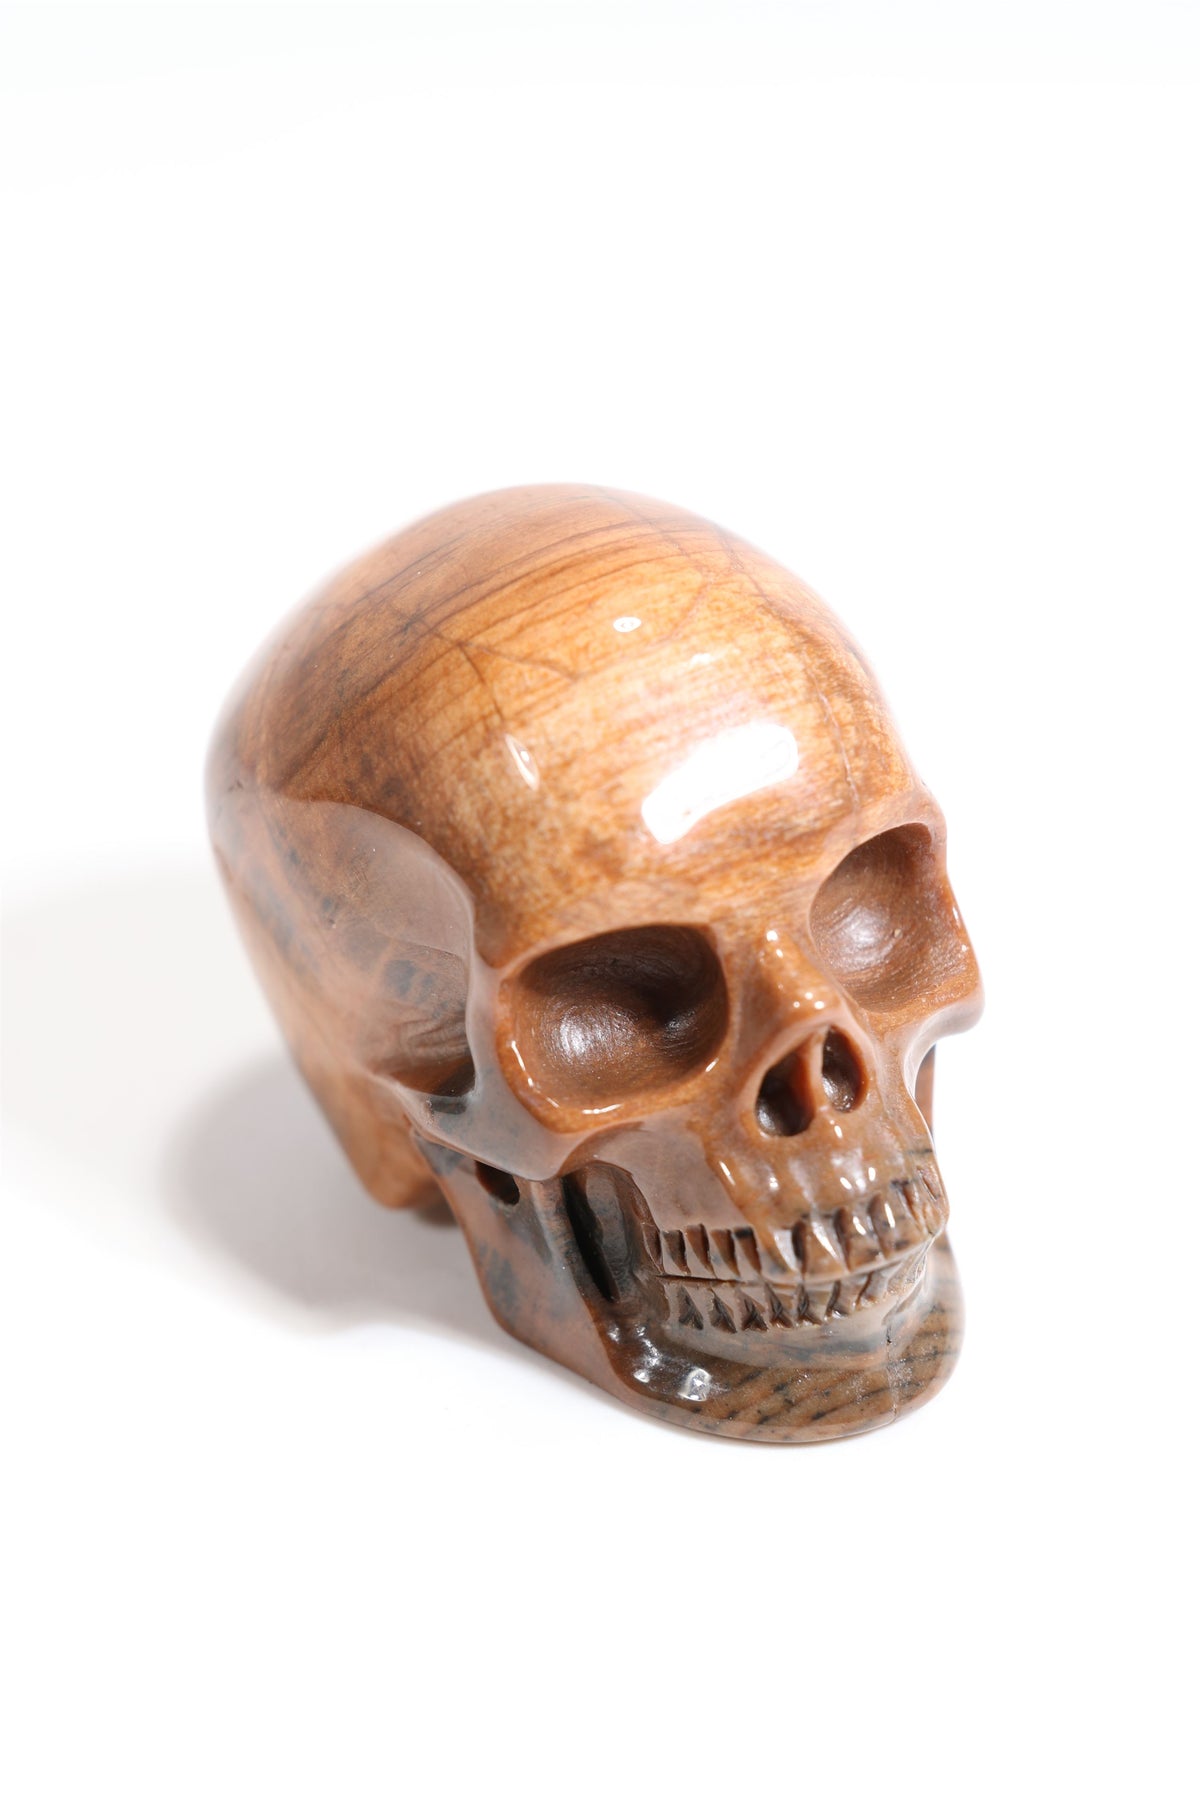 Petrified Wood 2" Skull - Forgotten Rarities